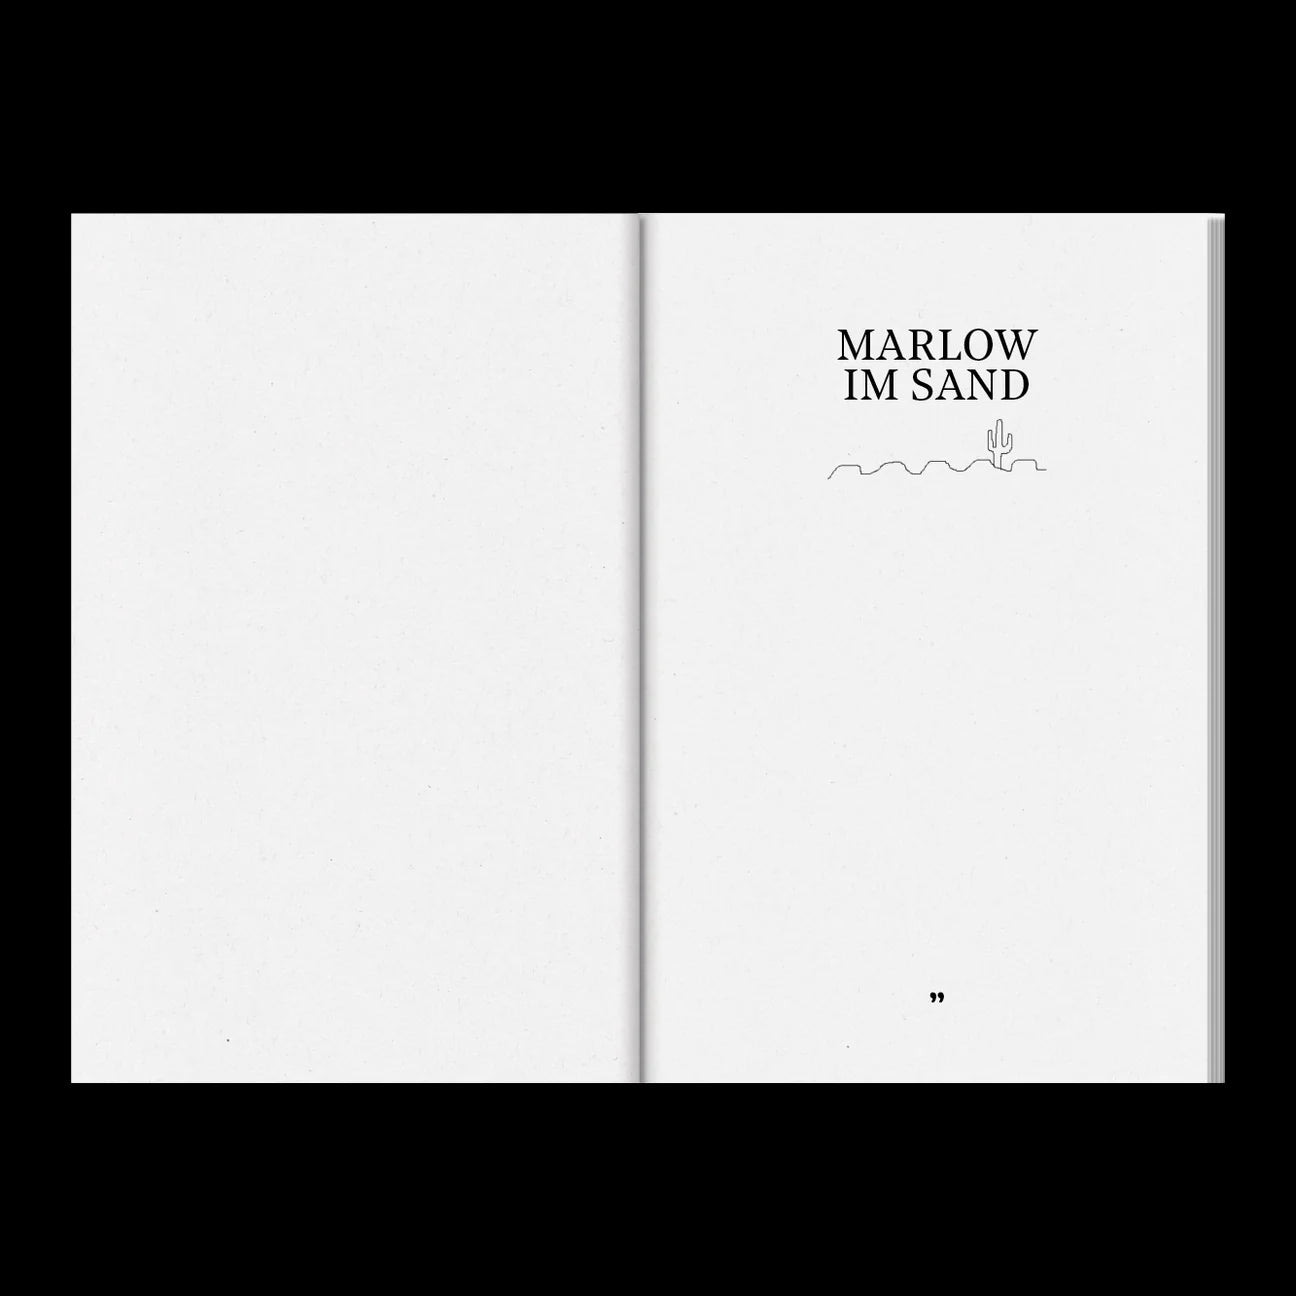 Marlow im sand by Charlotte Krafft